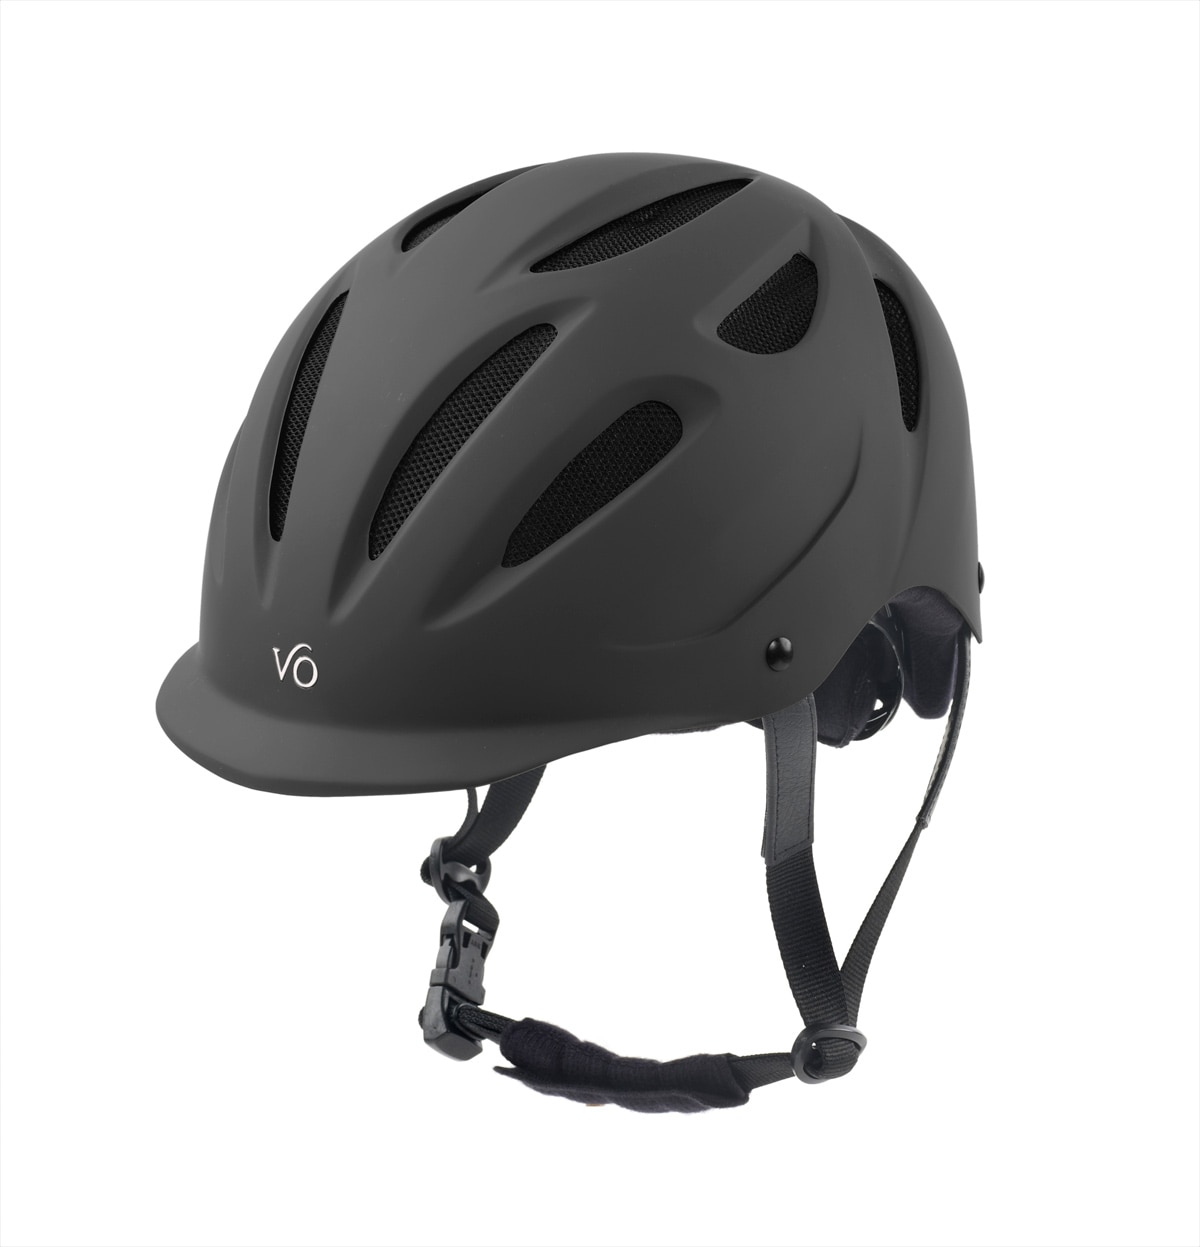 Ovation Protege Matte Helmet